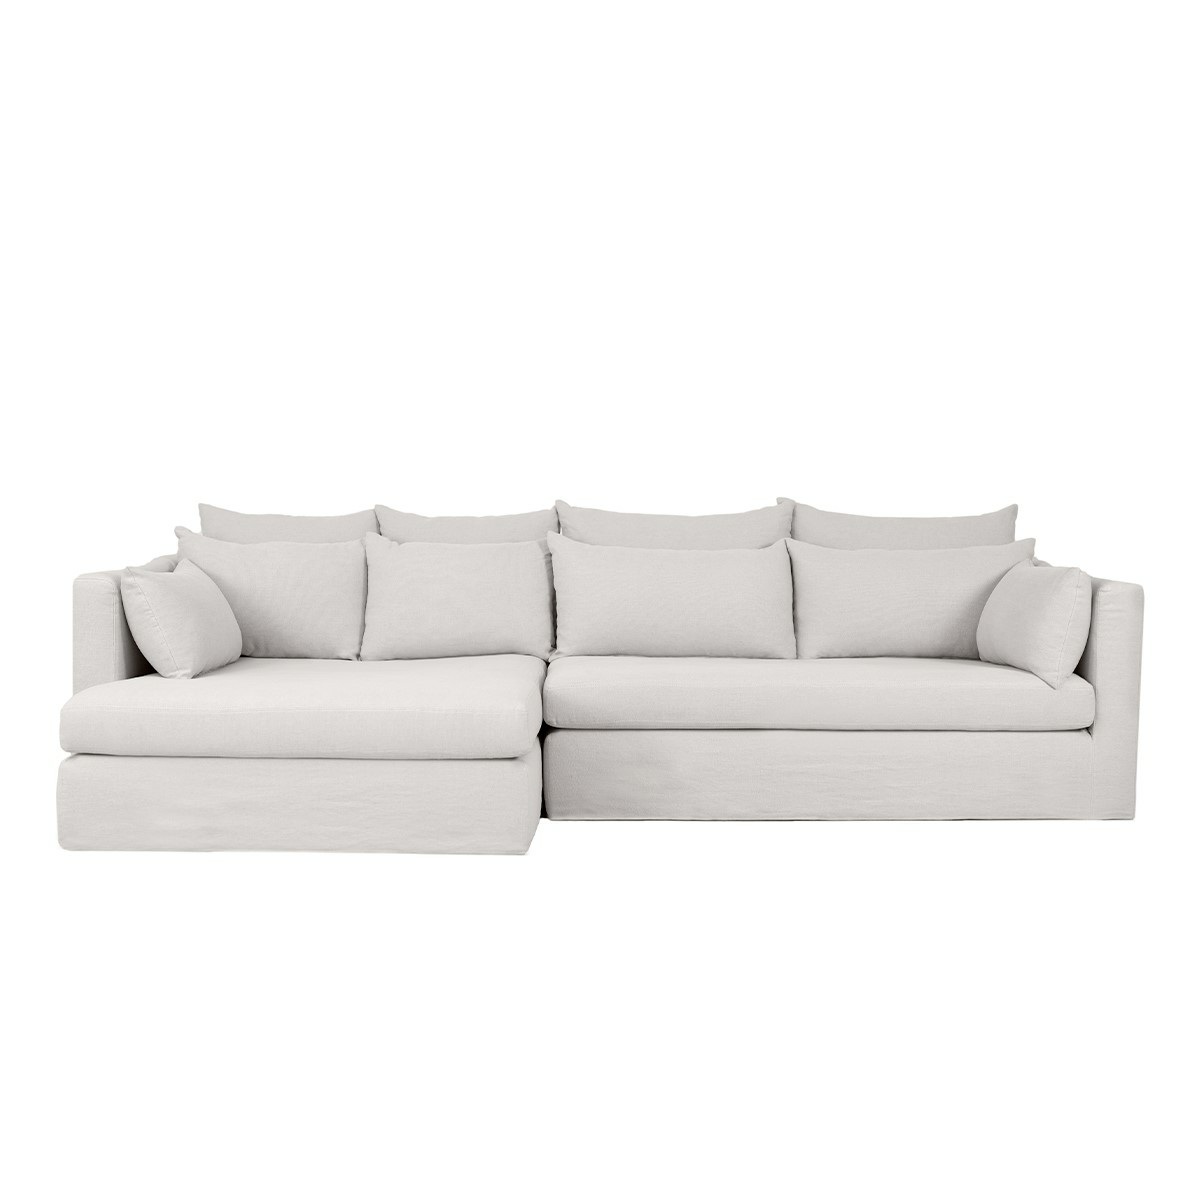 SuperBox corner sofa - Left angle, L300 x P180 x H85 cm - Linen - image 1